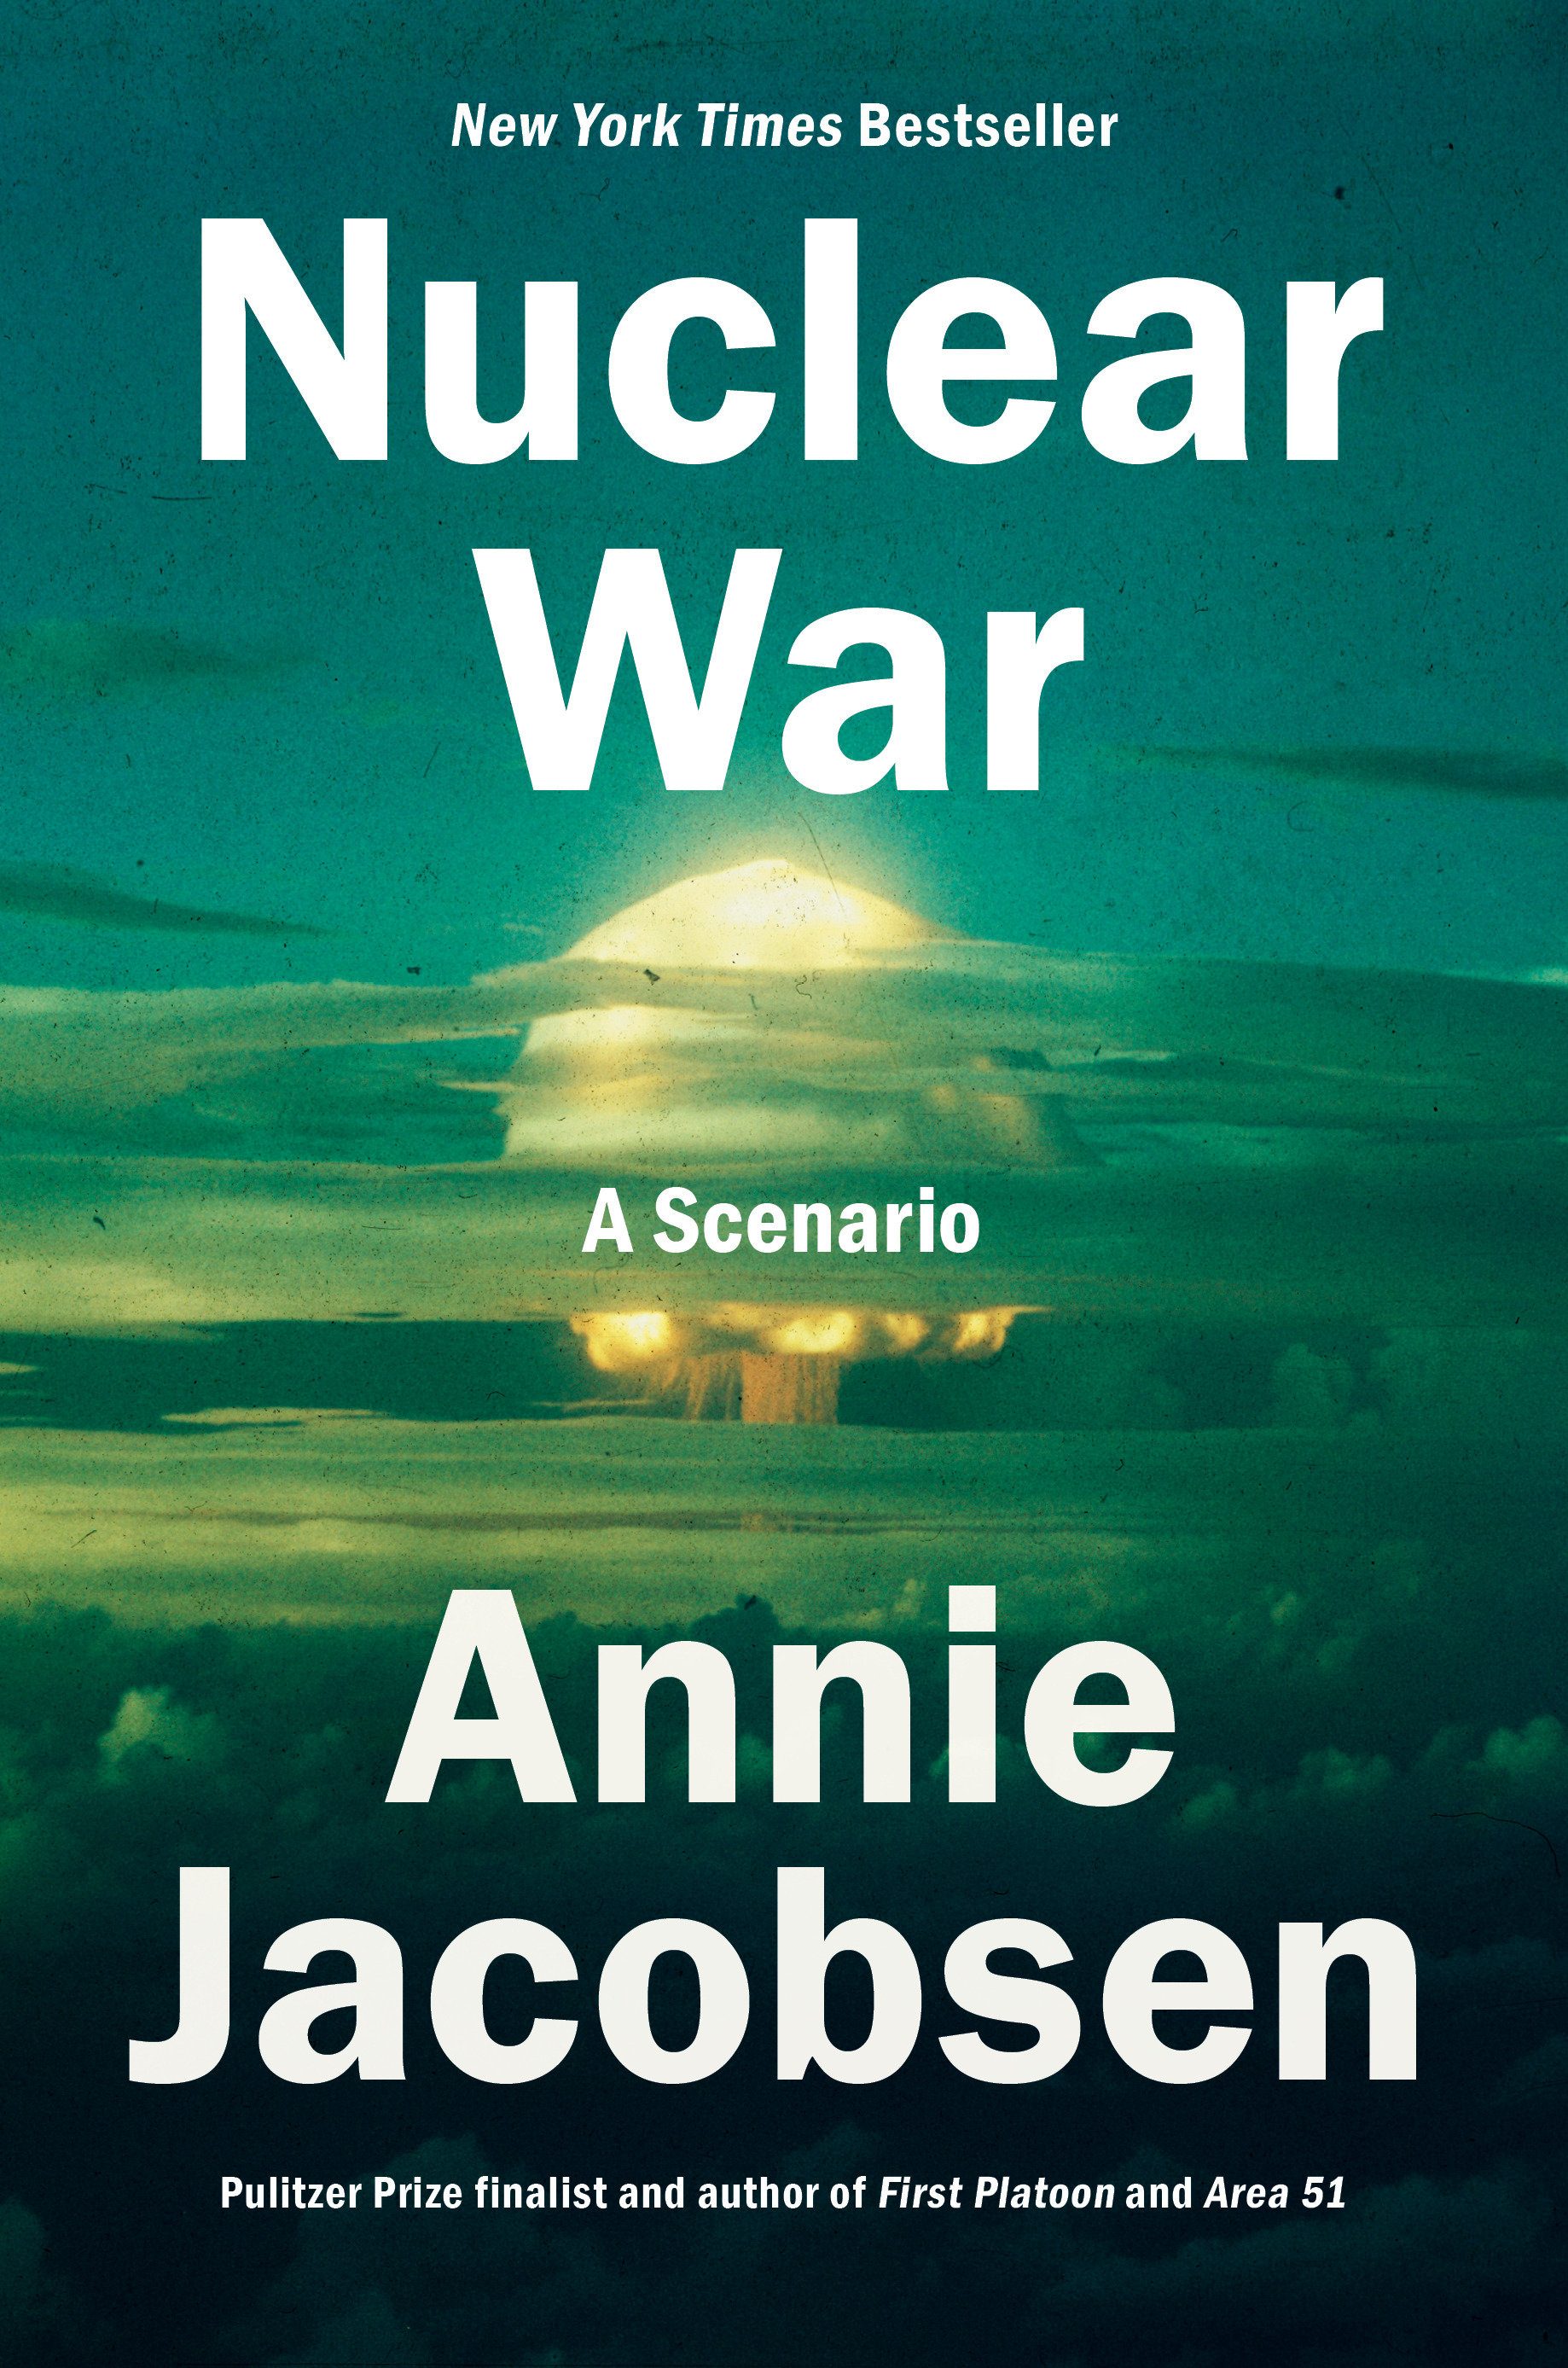 Nuclear War A Scenario cover image